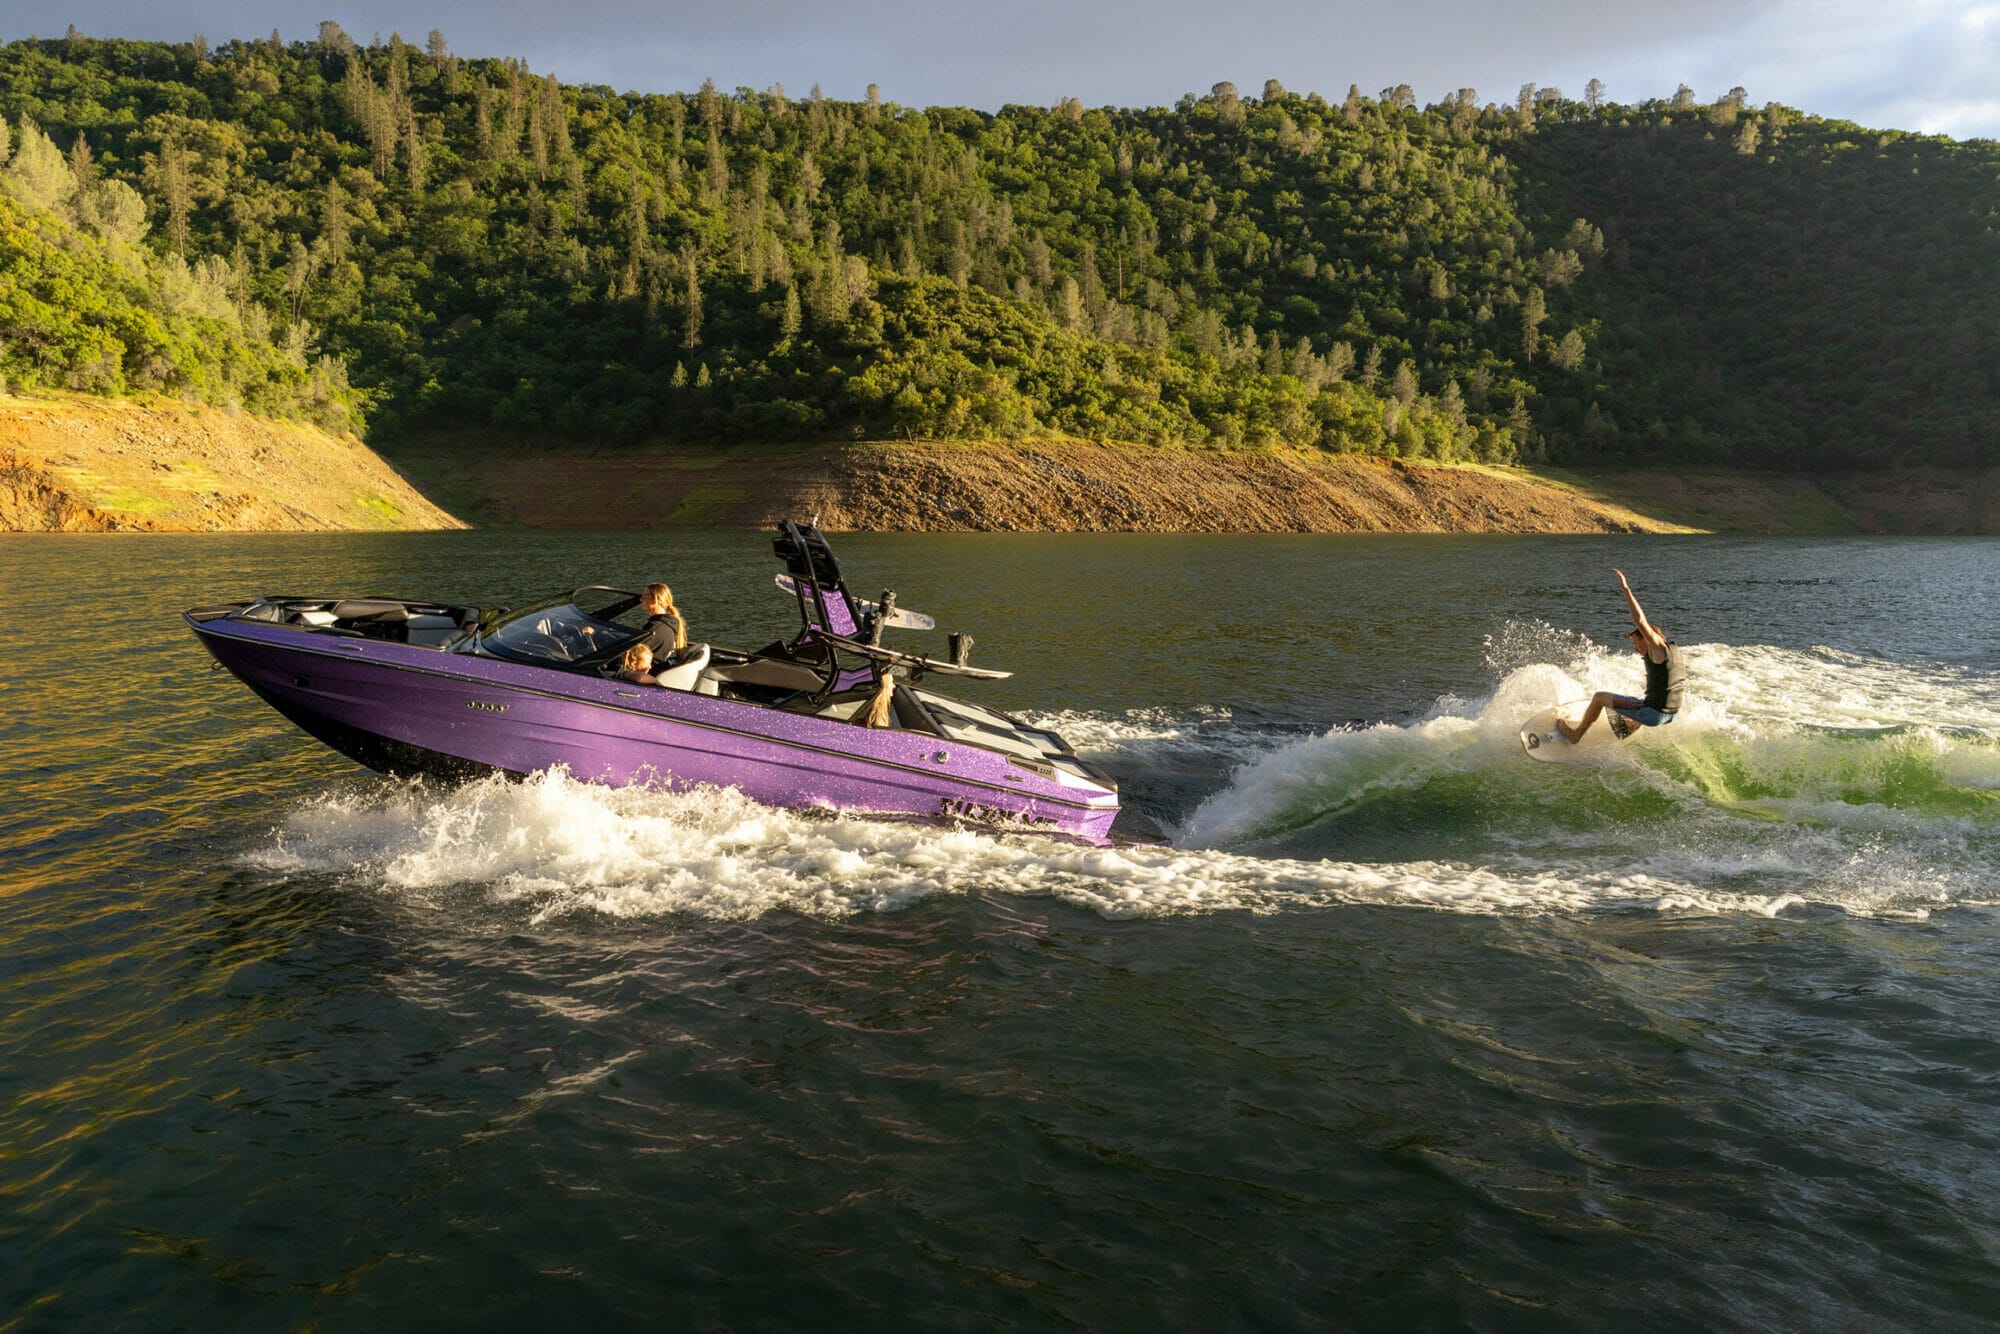 wake surfer behind a purple S220 Supreme boat